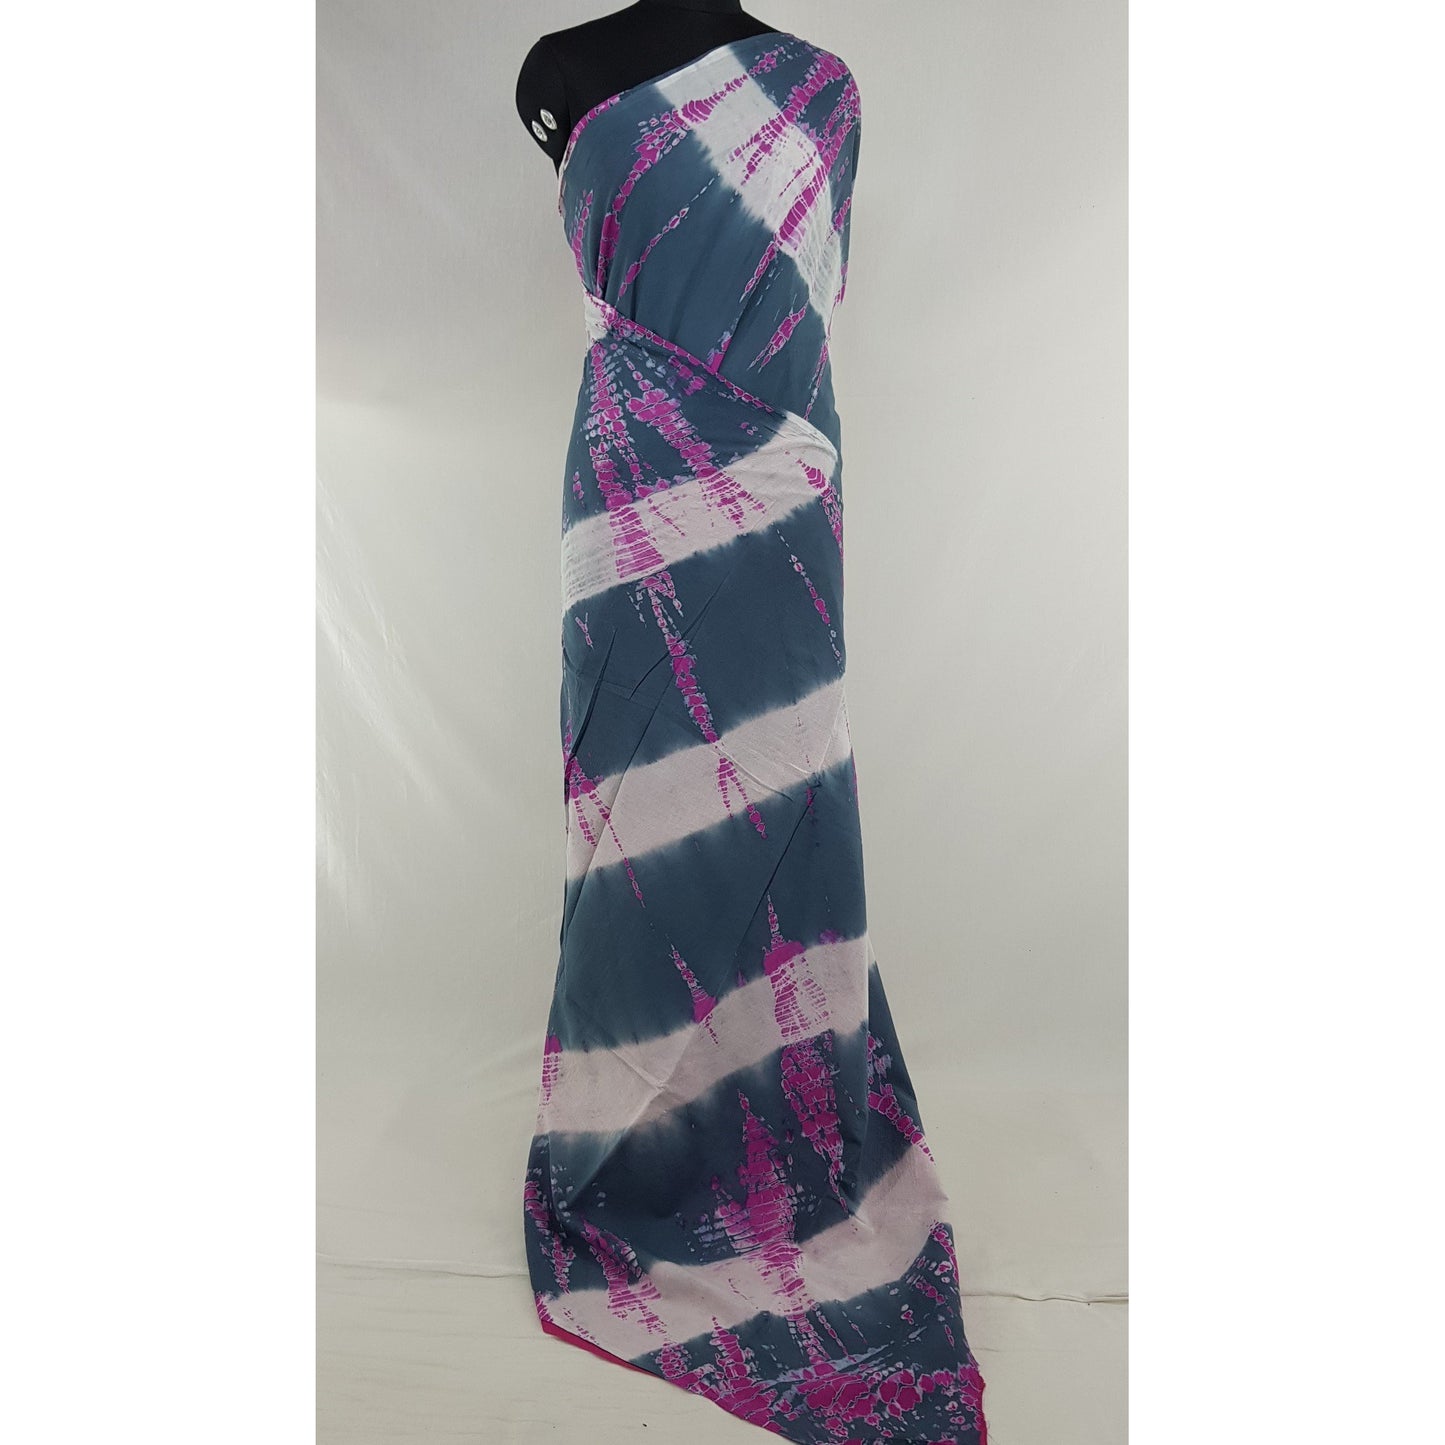 Hand Block Printed Bagru Grey and Pink color mul mul cotton saree with plain blouse - Vinshika